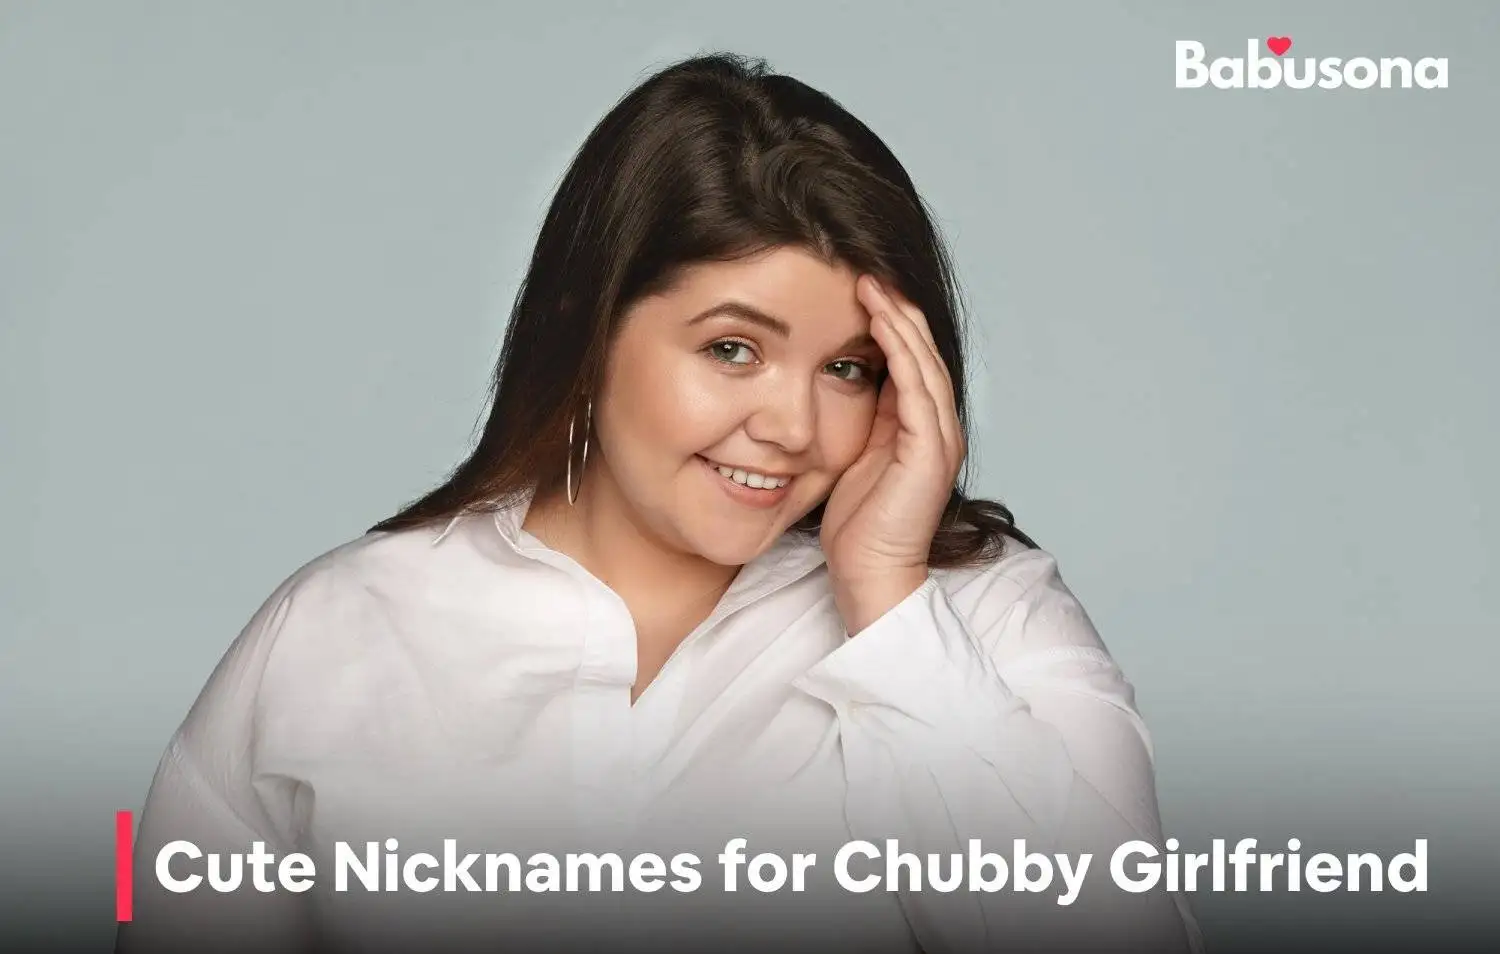 chubby girlfriend nicknames, cute nicknames for chubby girlfriend, nicknames for chubby girlfriend, cute names for chubby girlfriend.